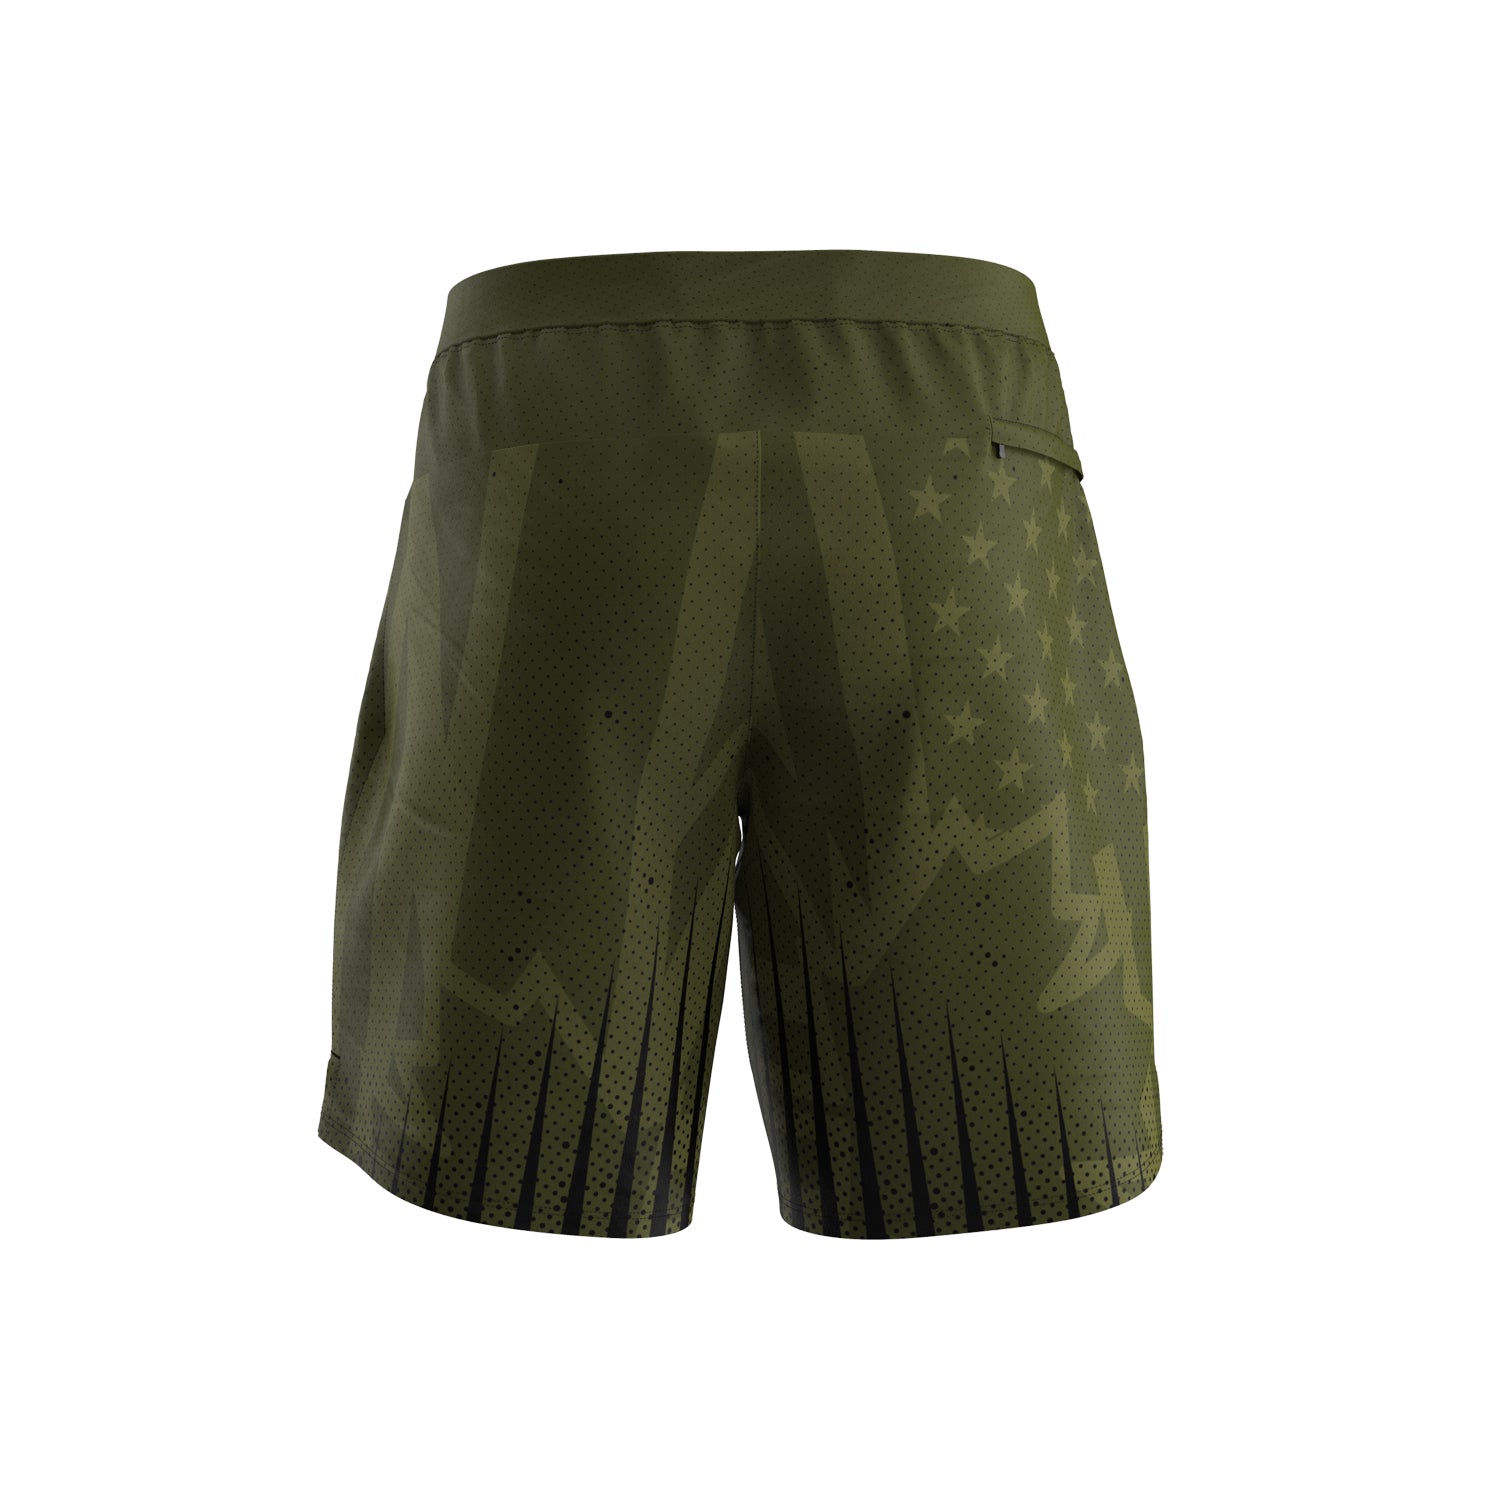 Allied Army - Sprint Shorts